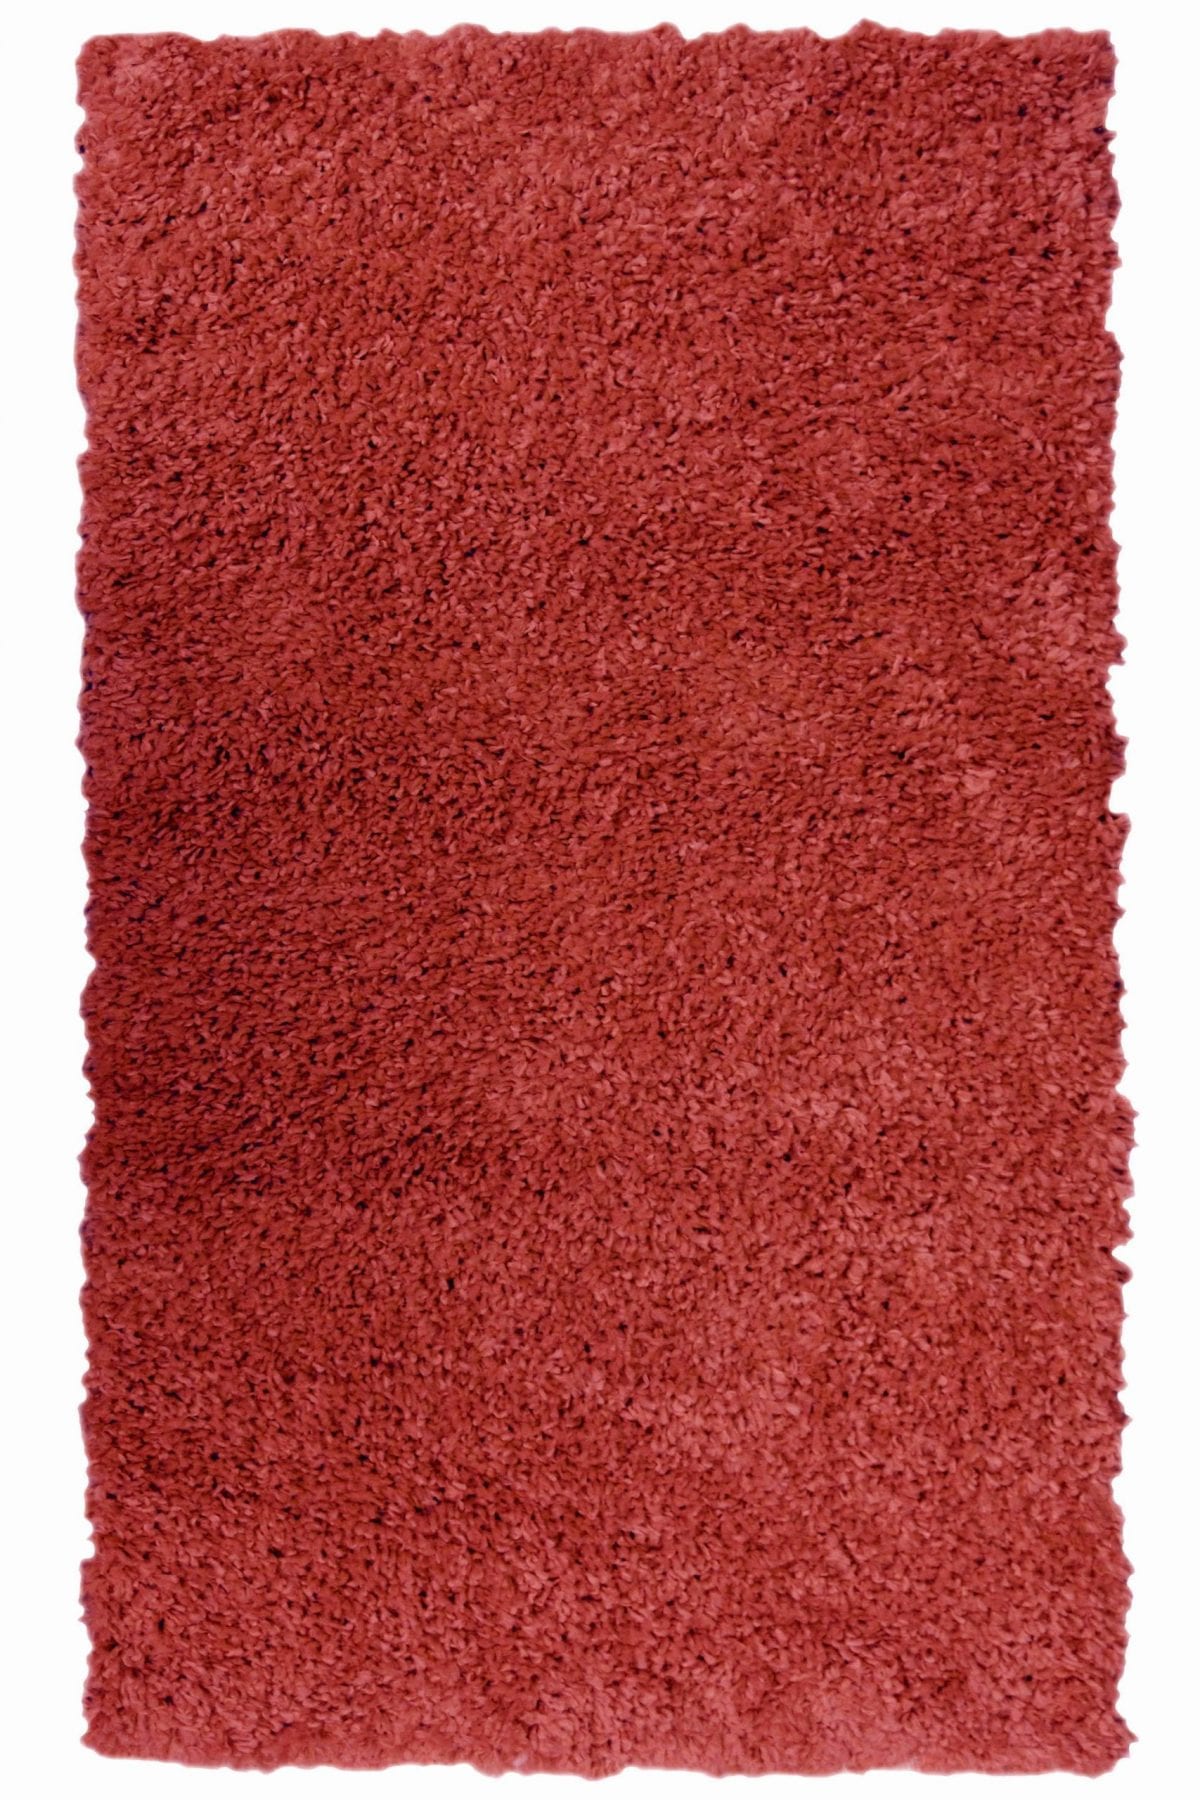 red-noble-plain-shaggy-rug